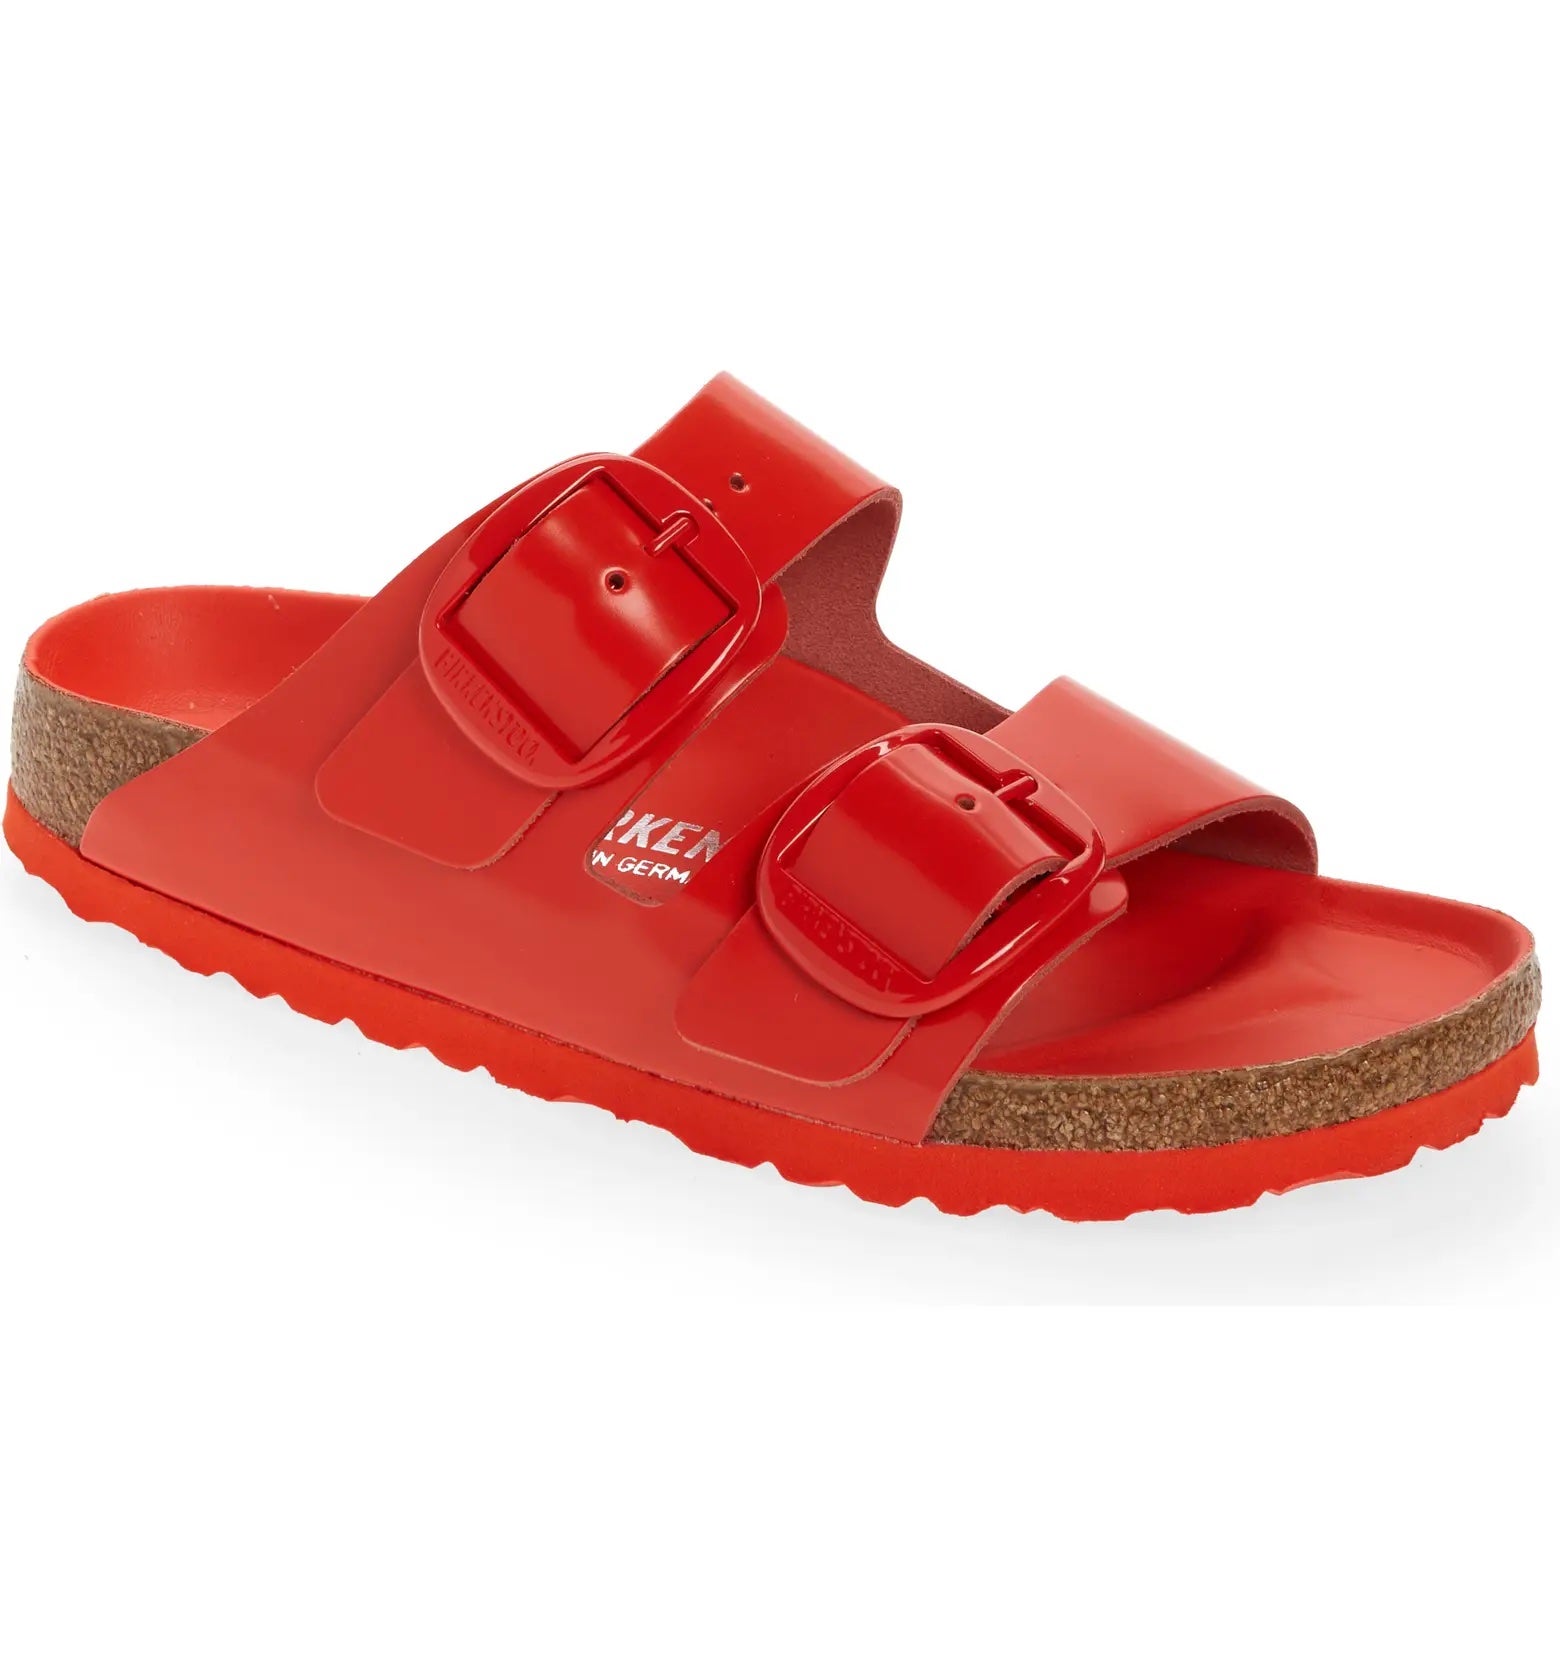 tomato red, high-shine birkenstock sandals